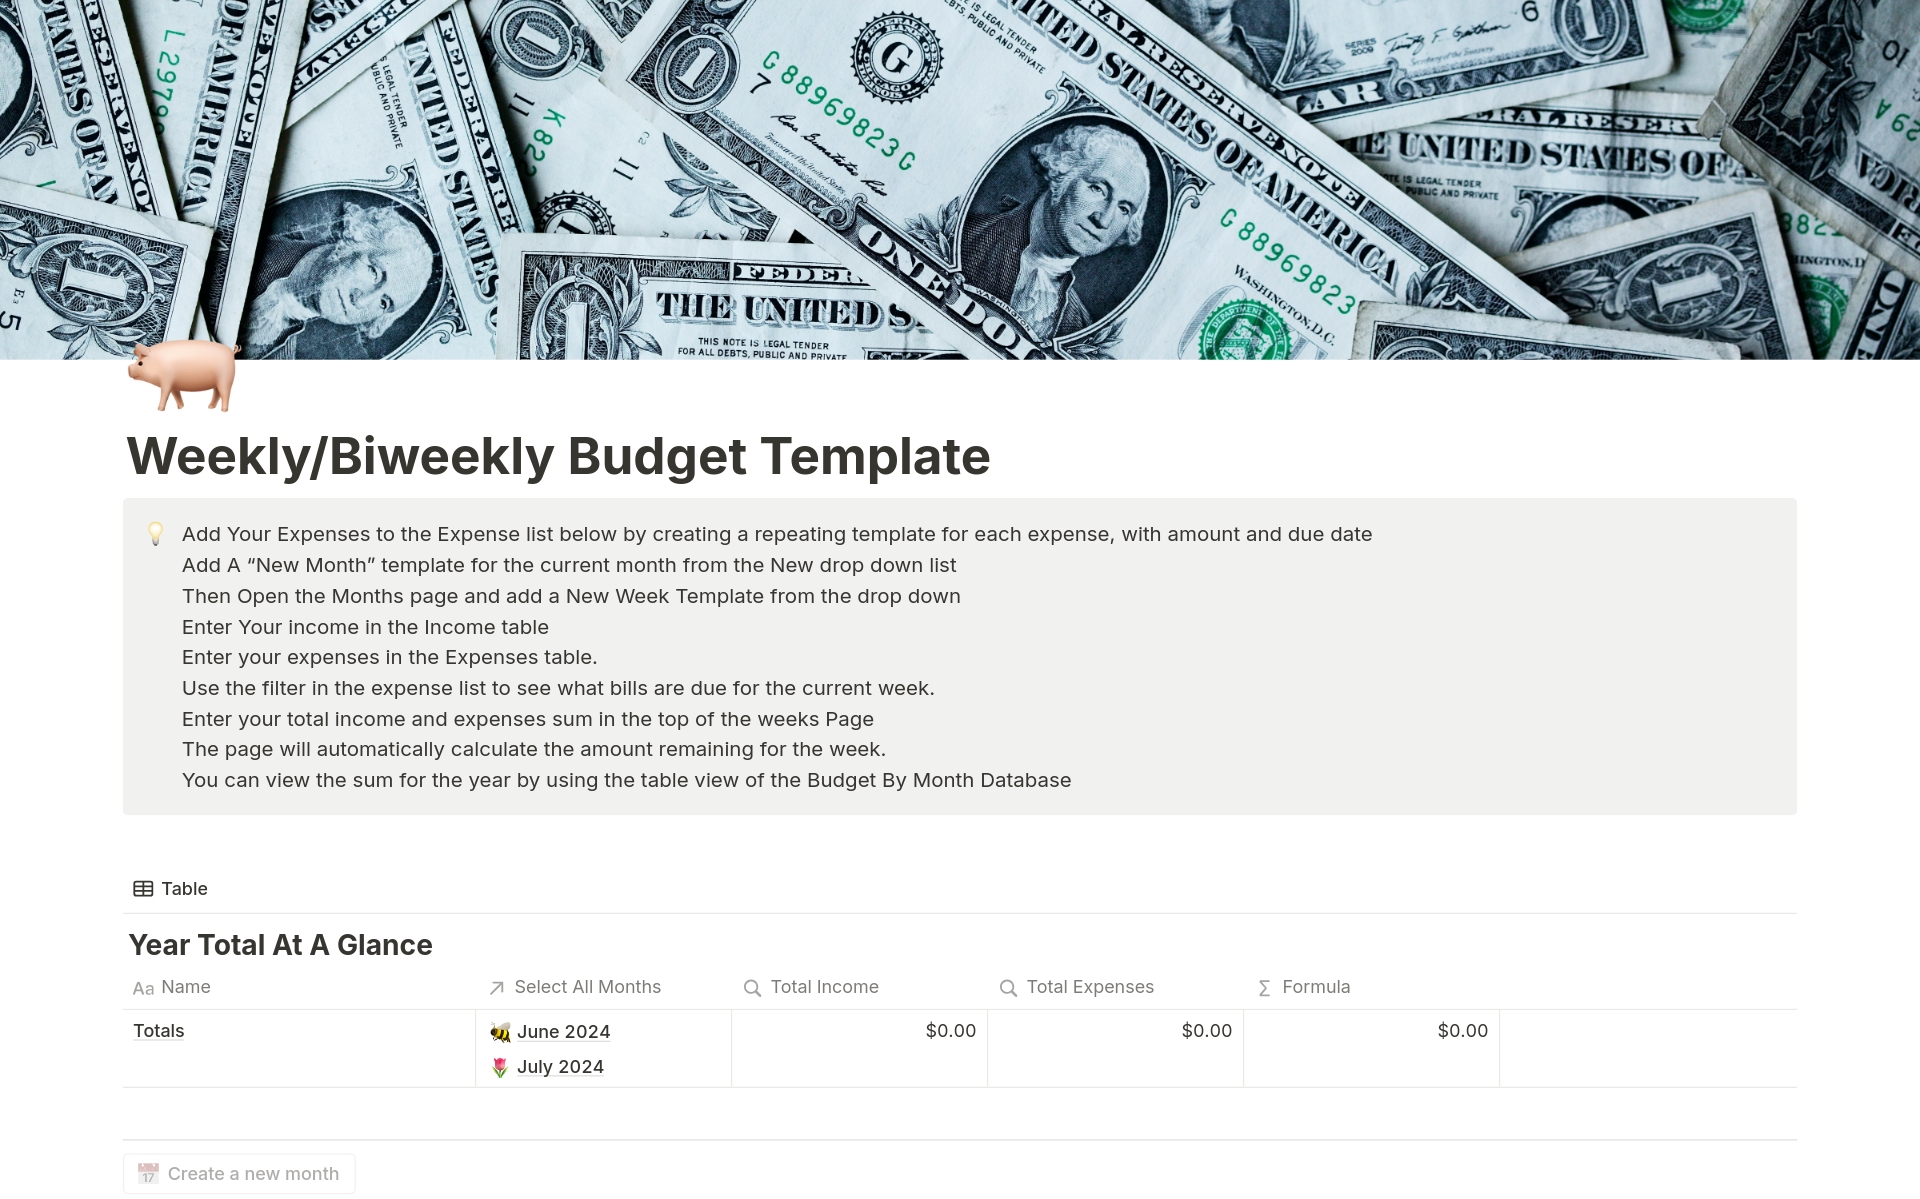 Weekly/Biweekly Budget Template